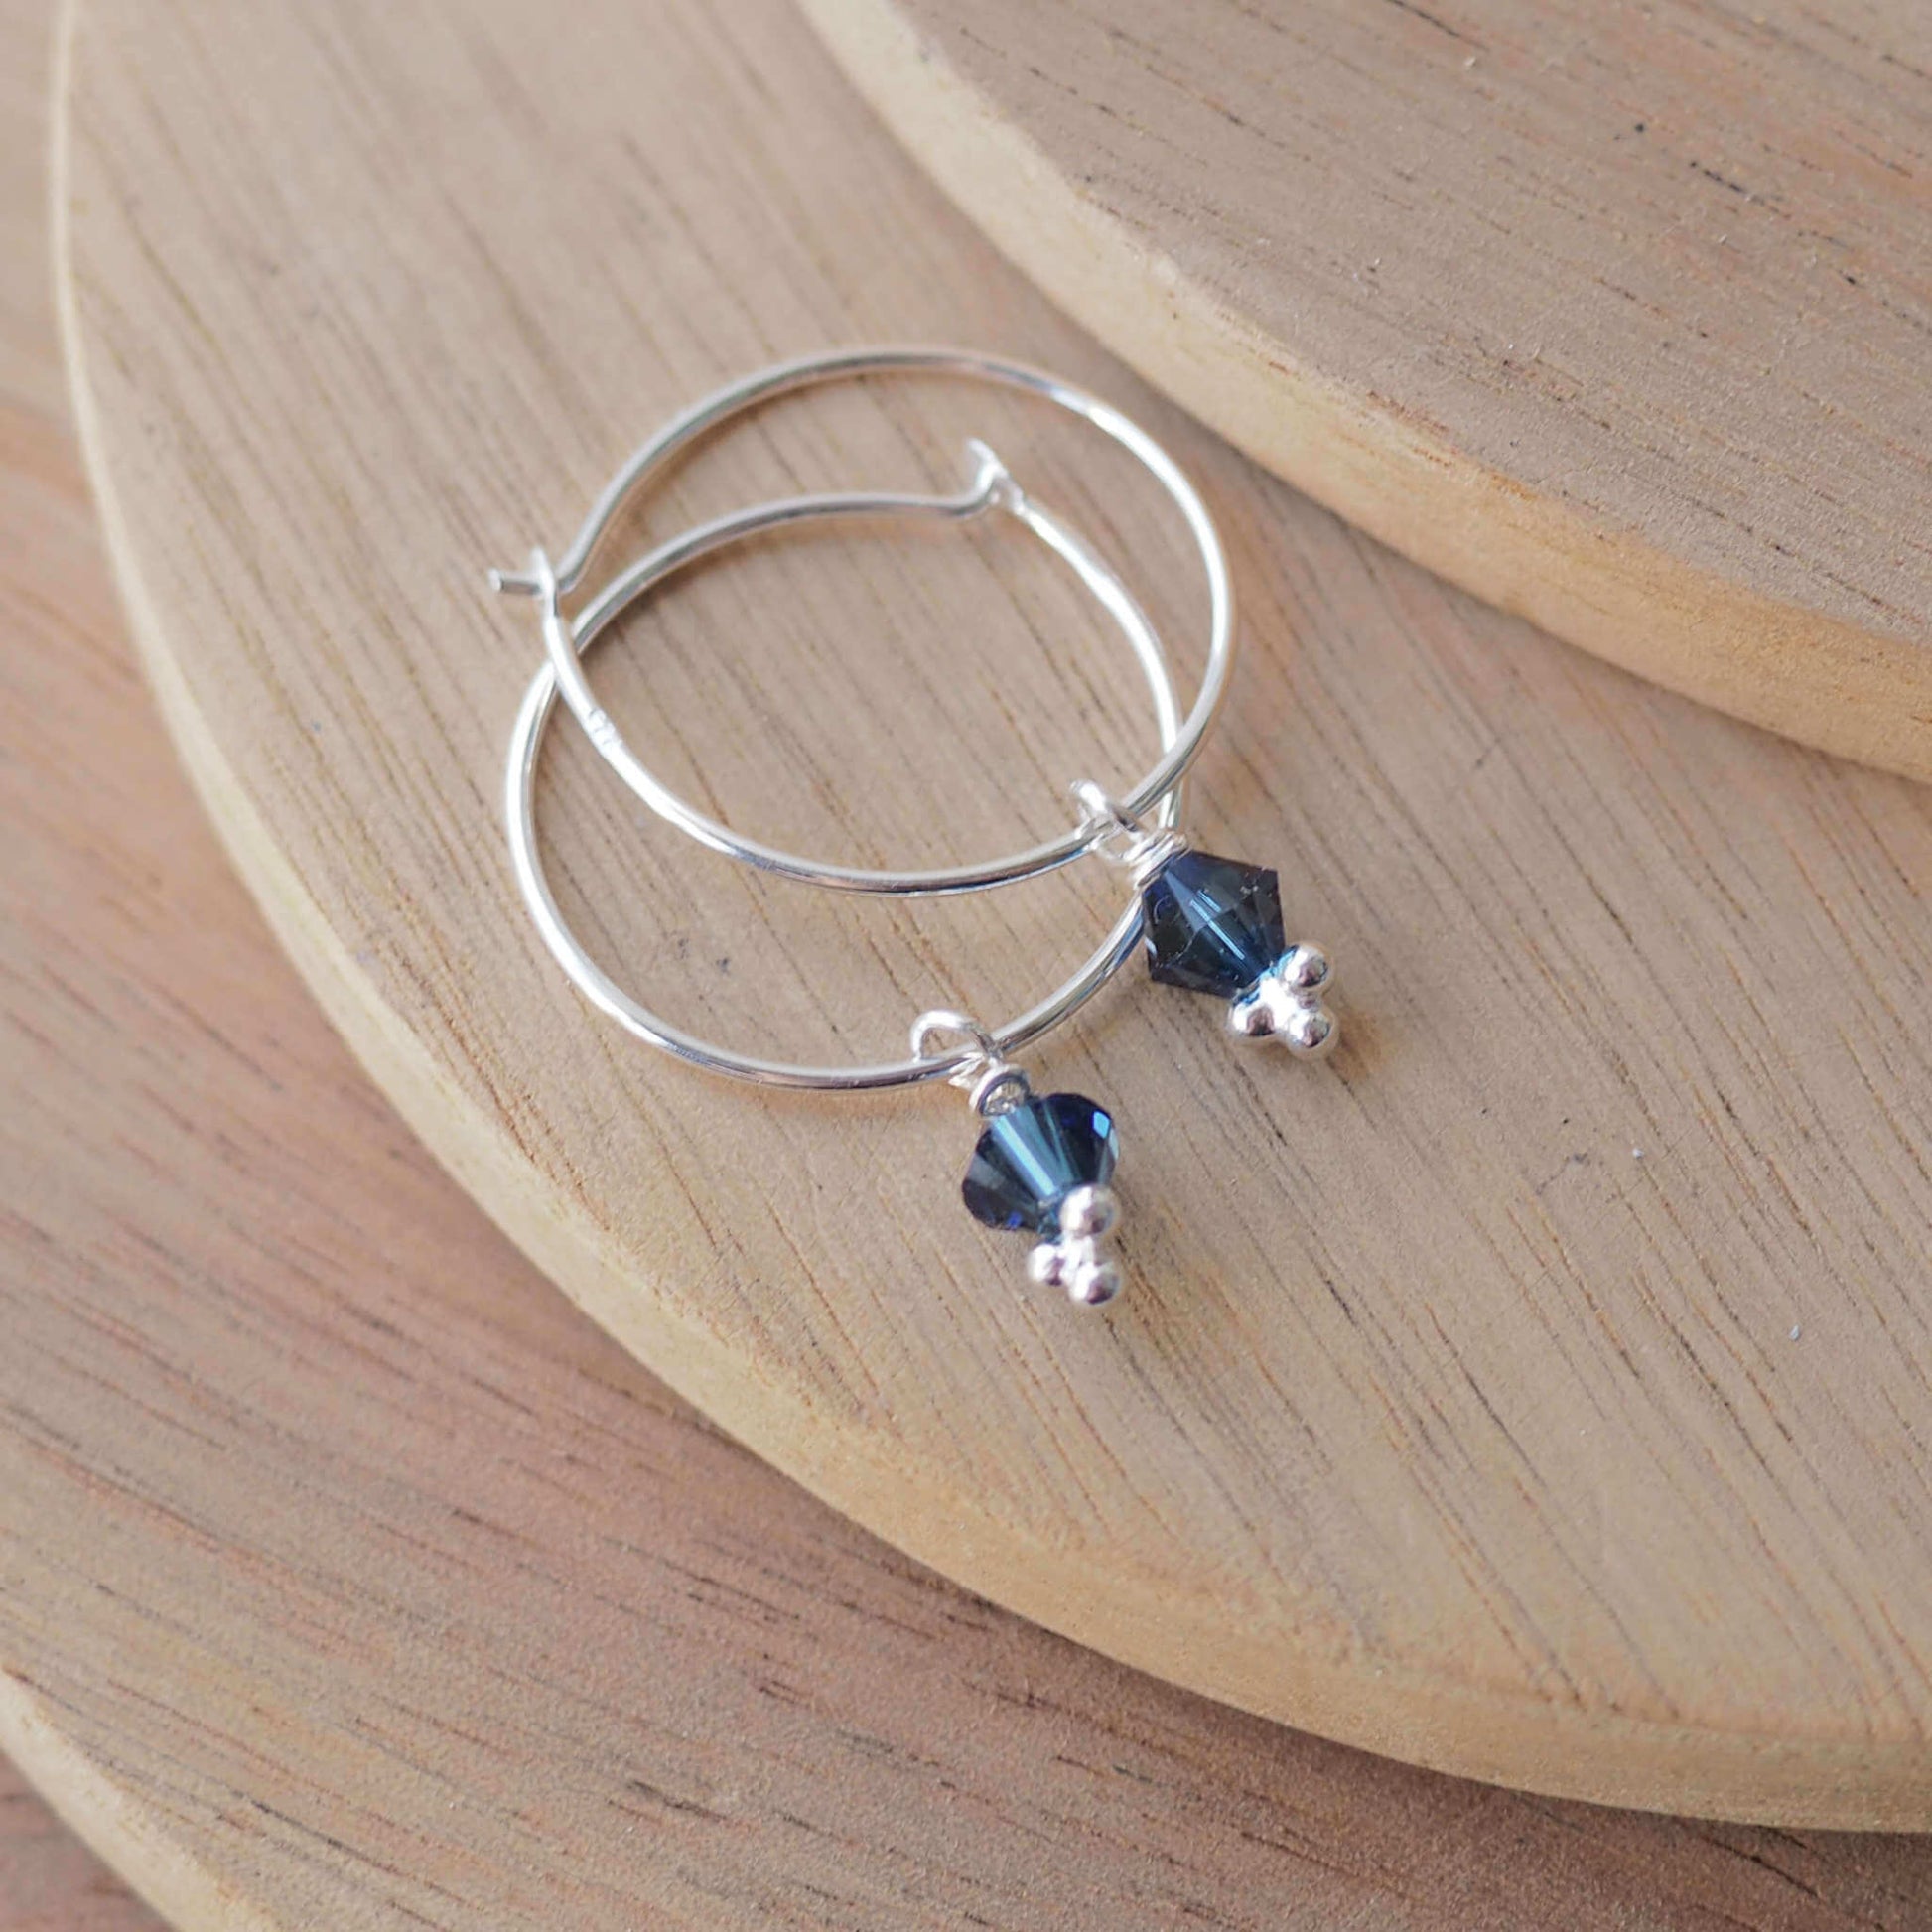 Teal Crystal simple wire hoop earrings with a crystal dropper in a petrol blue. Handmade in Scotland UK by maram jewellery